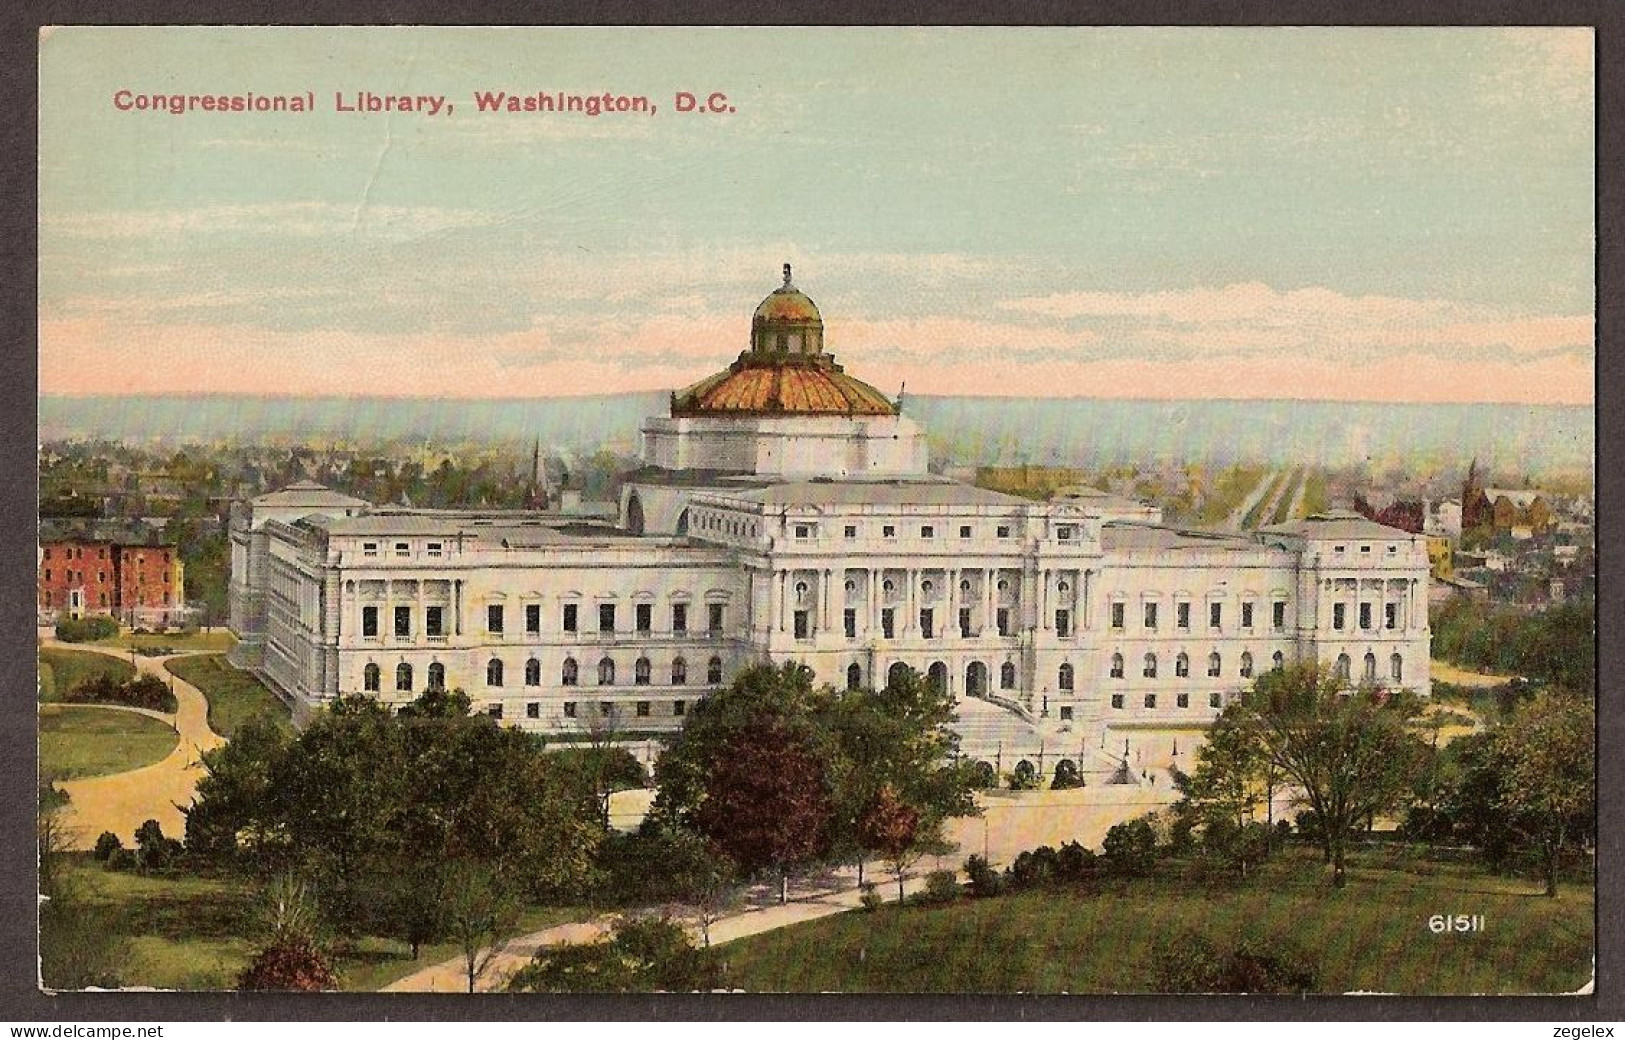 Library Of Congress, Washington D.C. - Washington DC